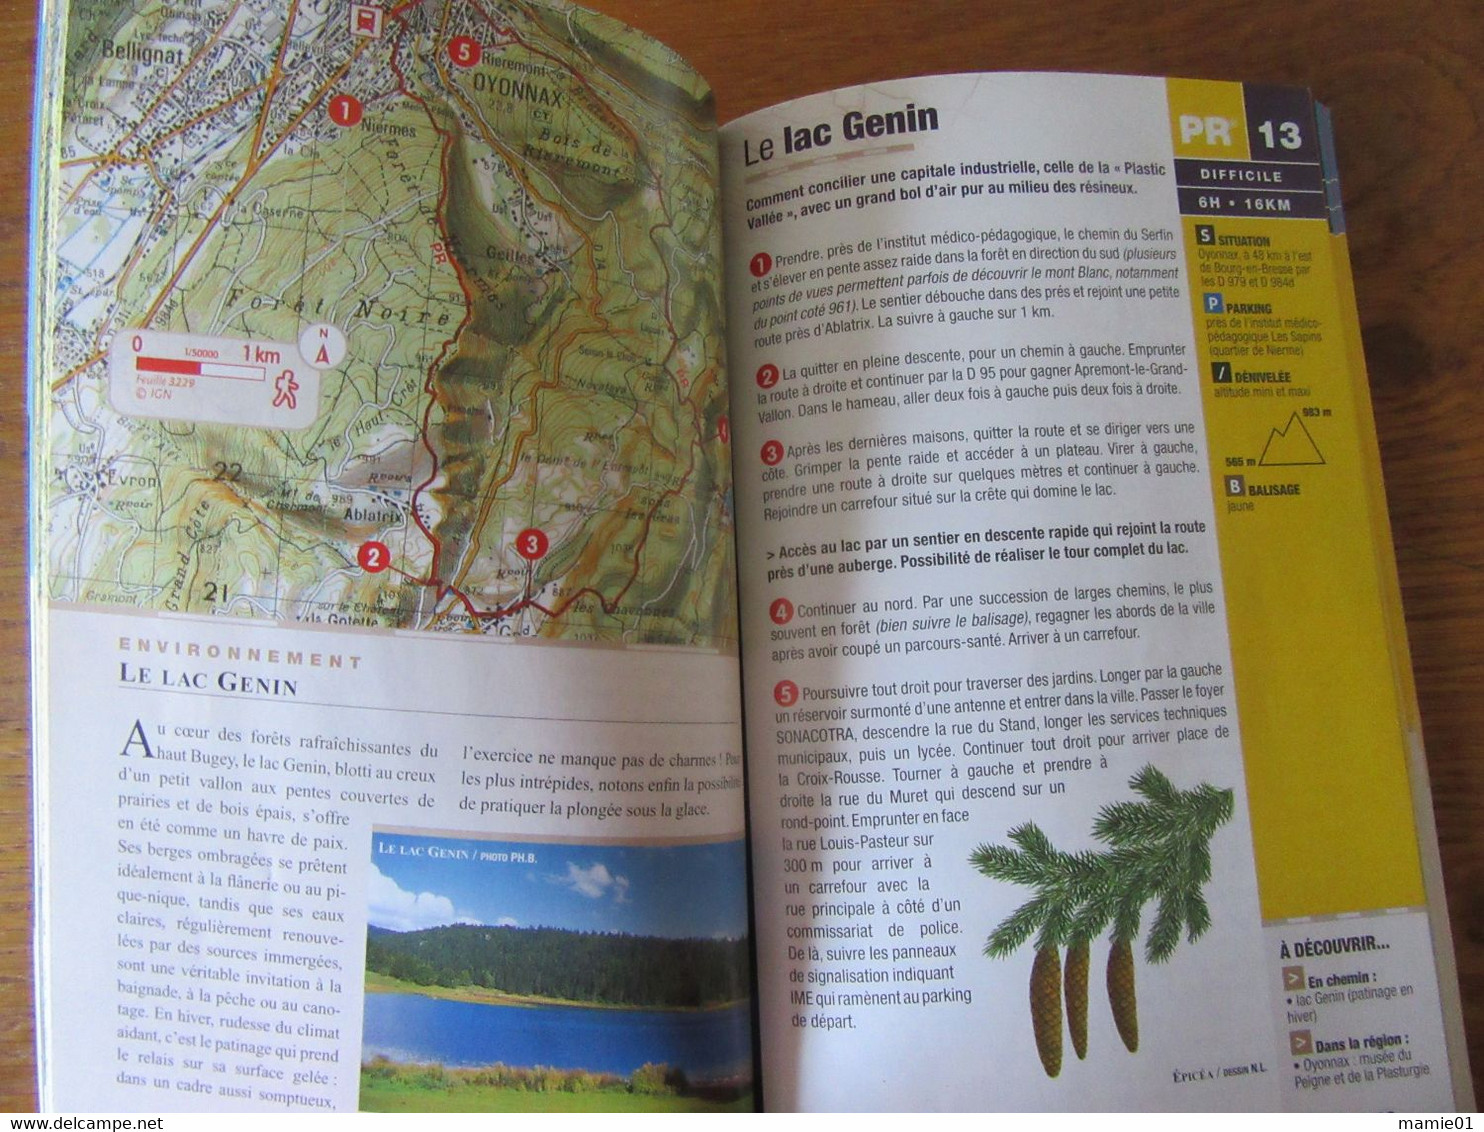 Topo Guides    L'Ain ...à Pied        Promenade & Randonnée - Michelin (guides)